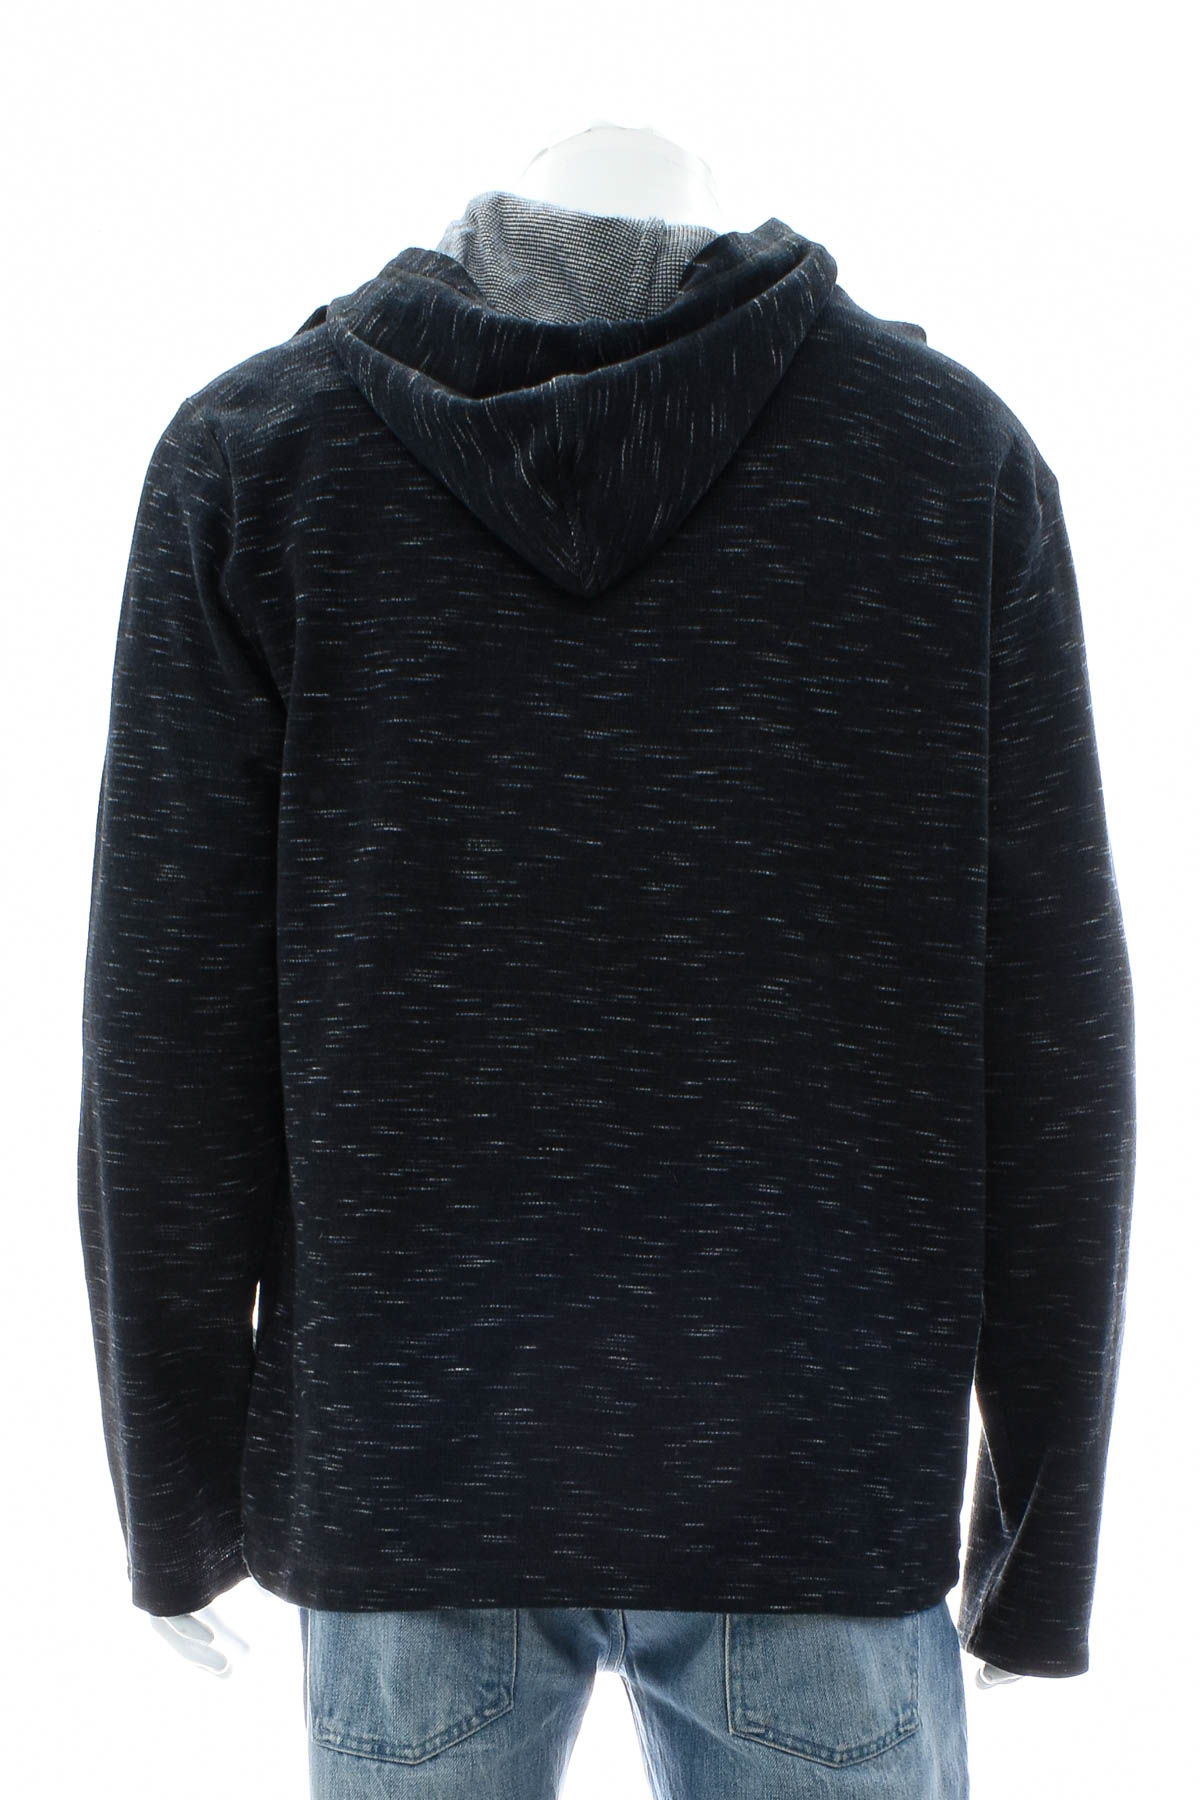 Men's sweater - Calvin Klein Jeans - 1